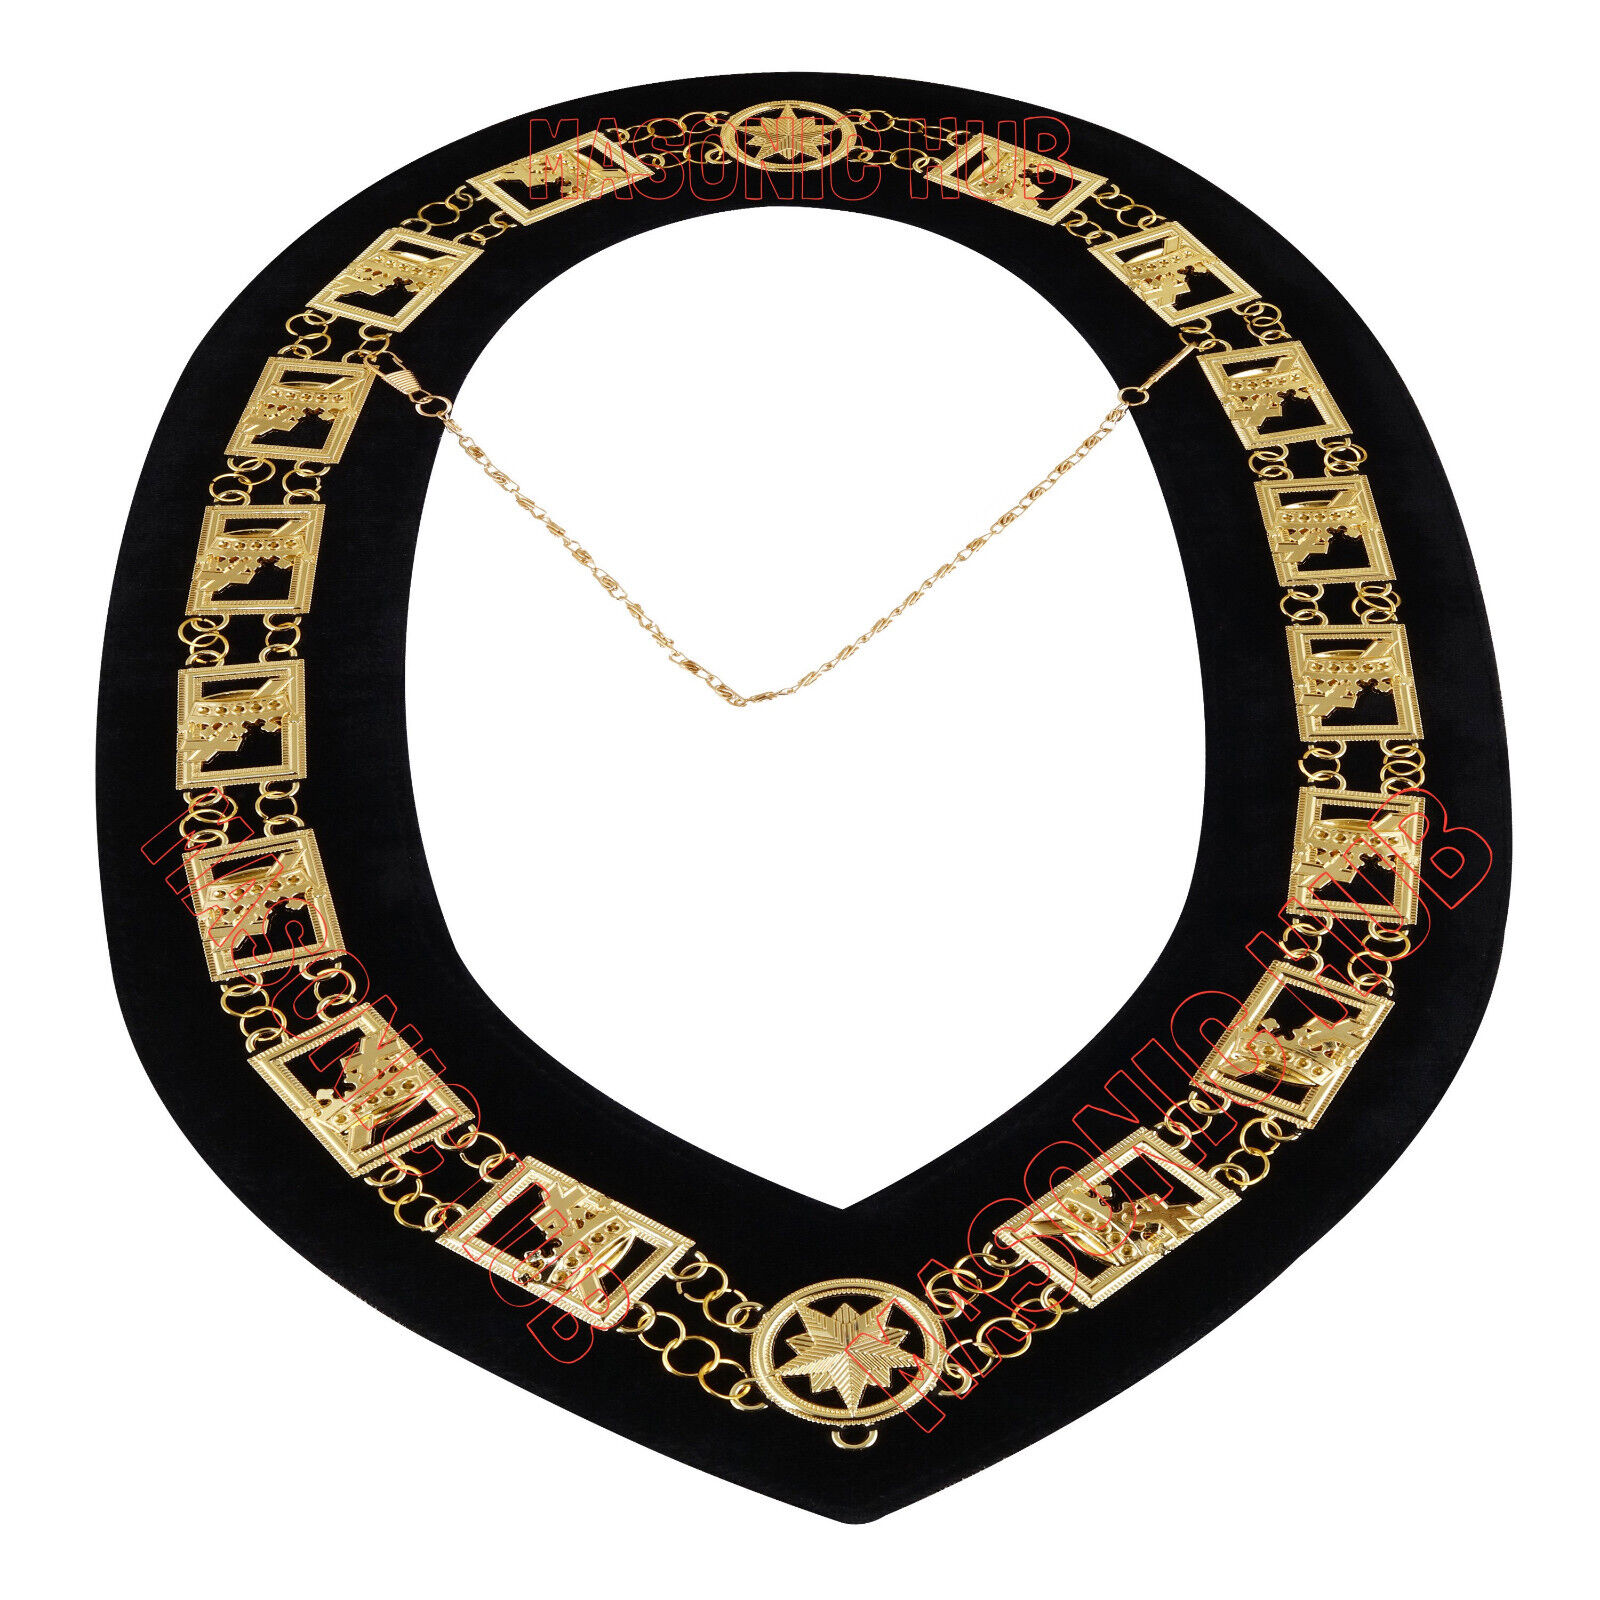 Knights Templar Masonic Regalia Metal Chain Collar with Black Velvet Gold Plated